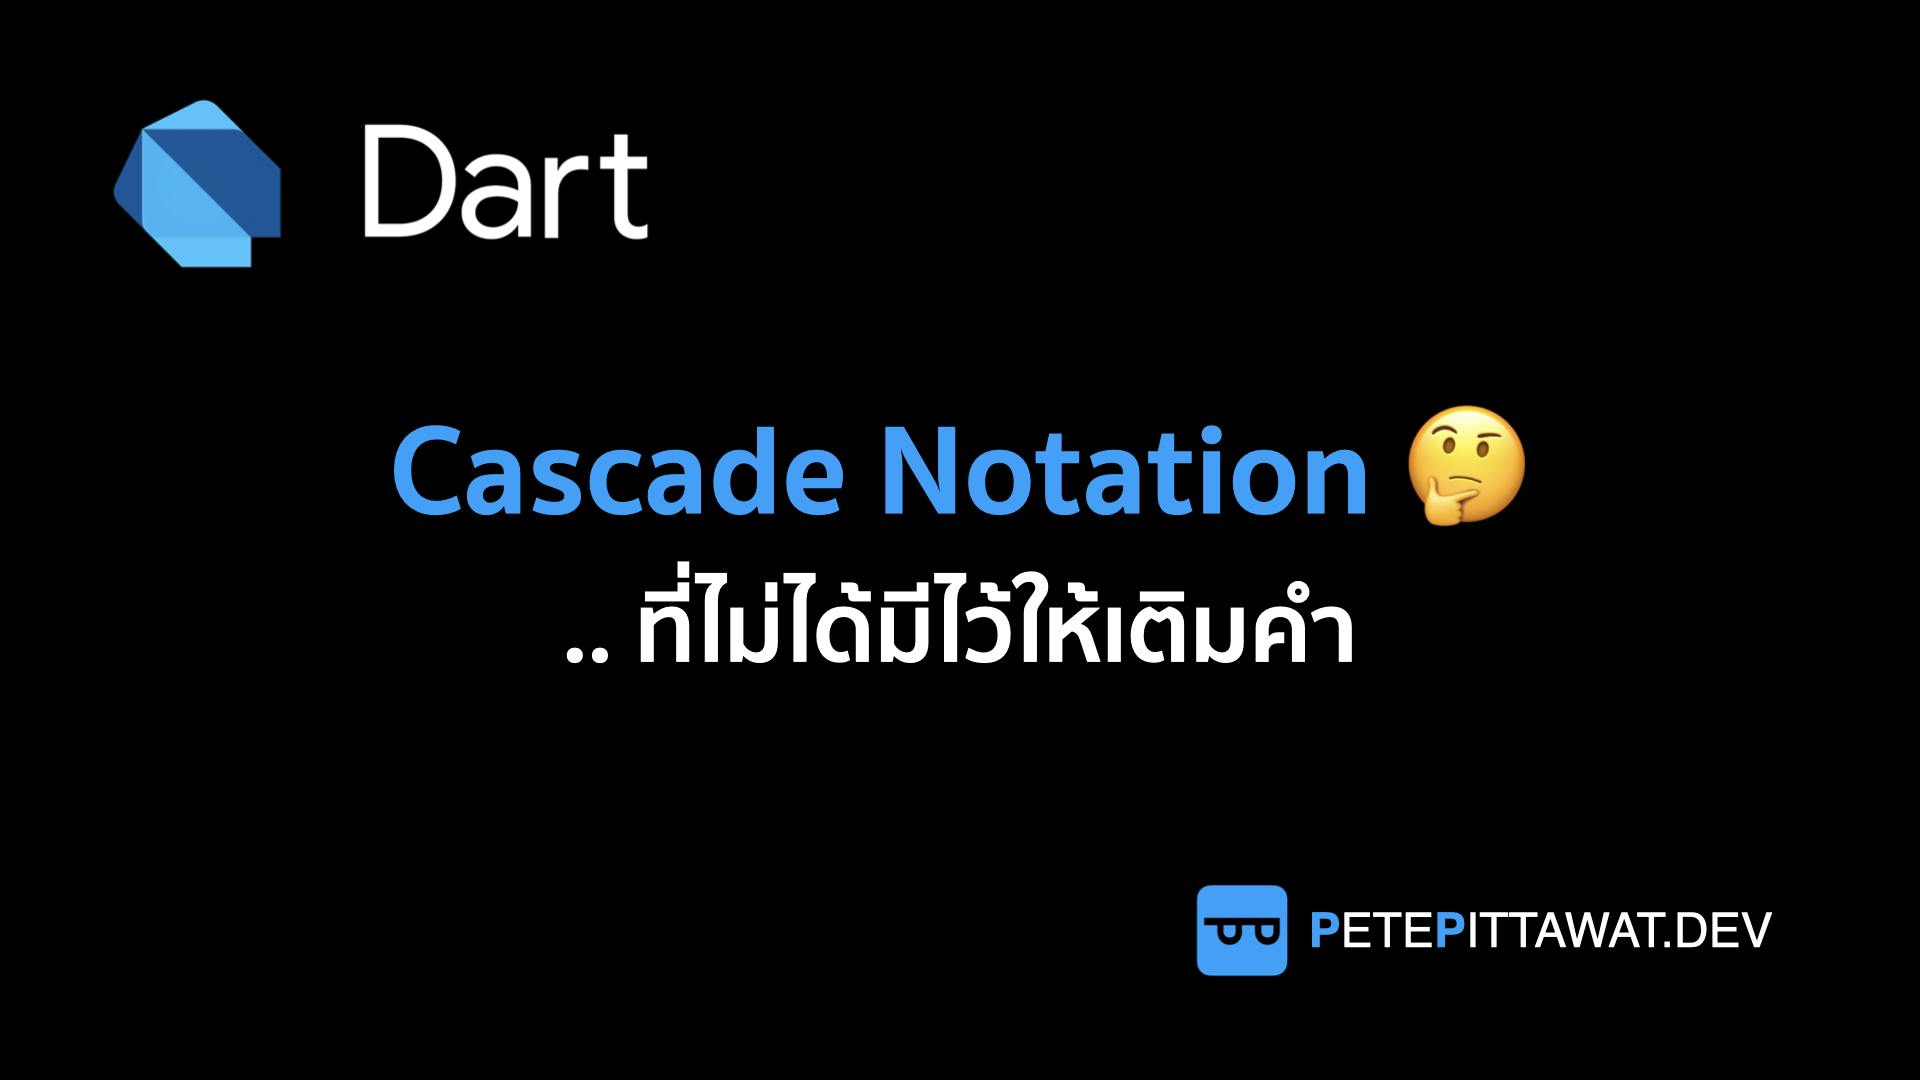 Cover Image for Dart: Cascade Notation .. (จุดจุด) ที่ไม่ได้ให้เติมคำลงในช่องว่าง